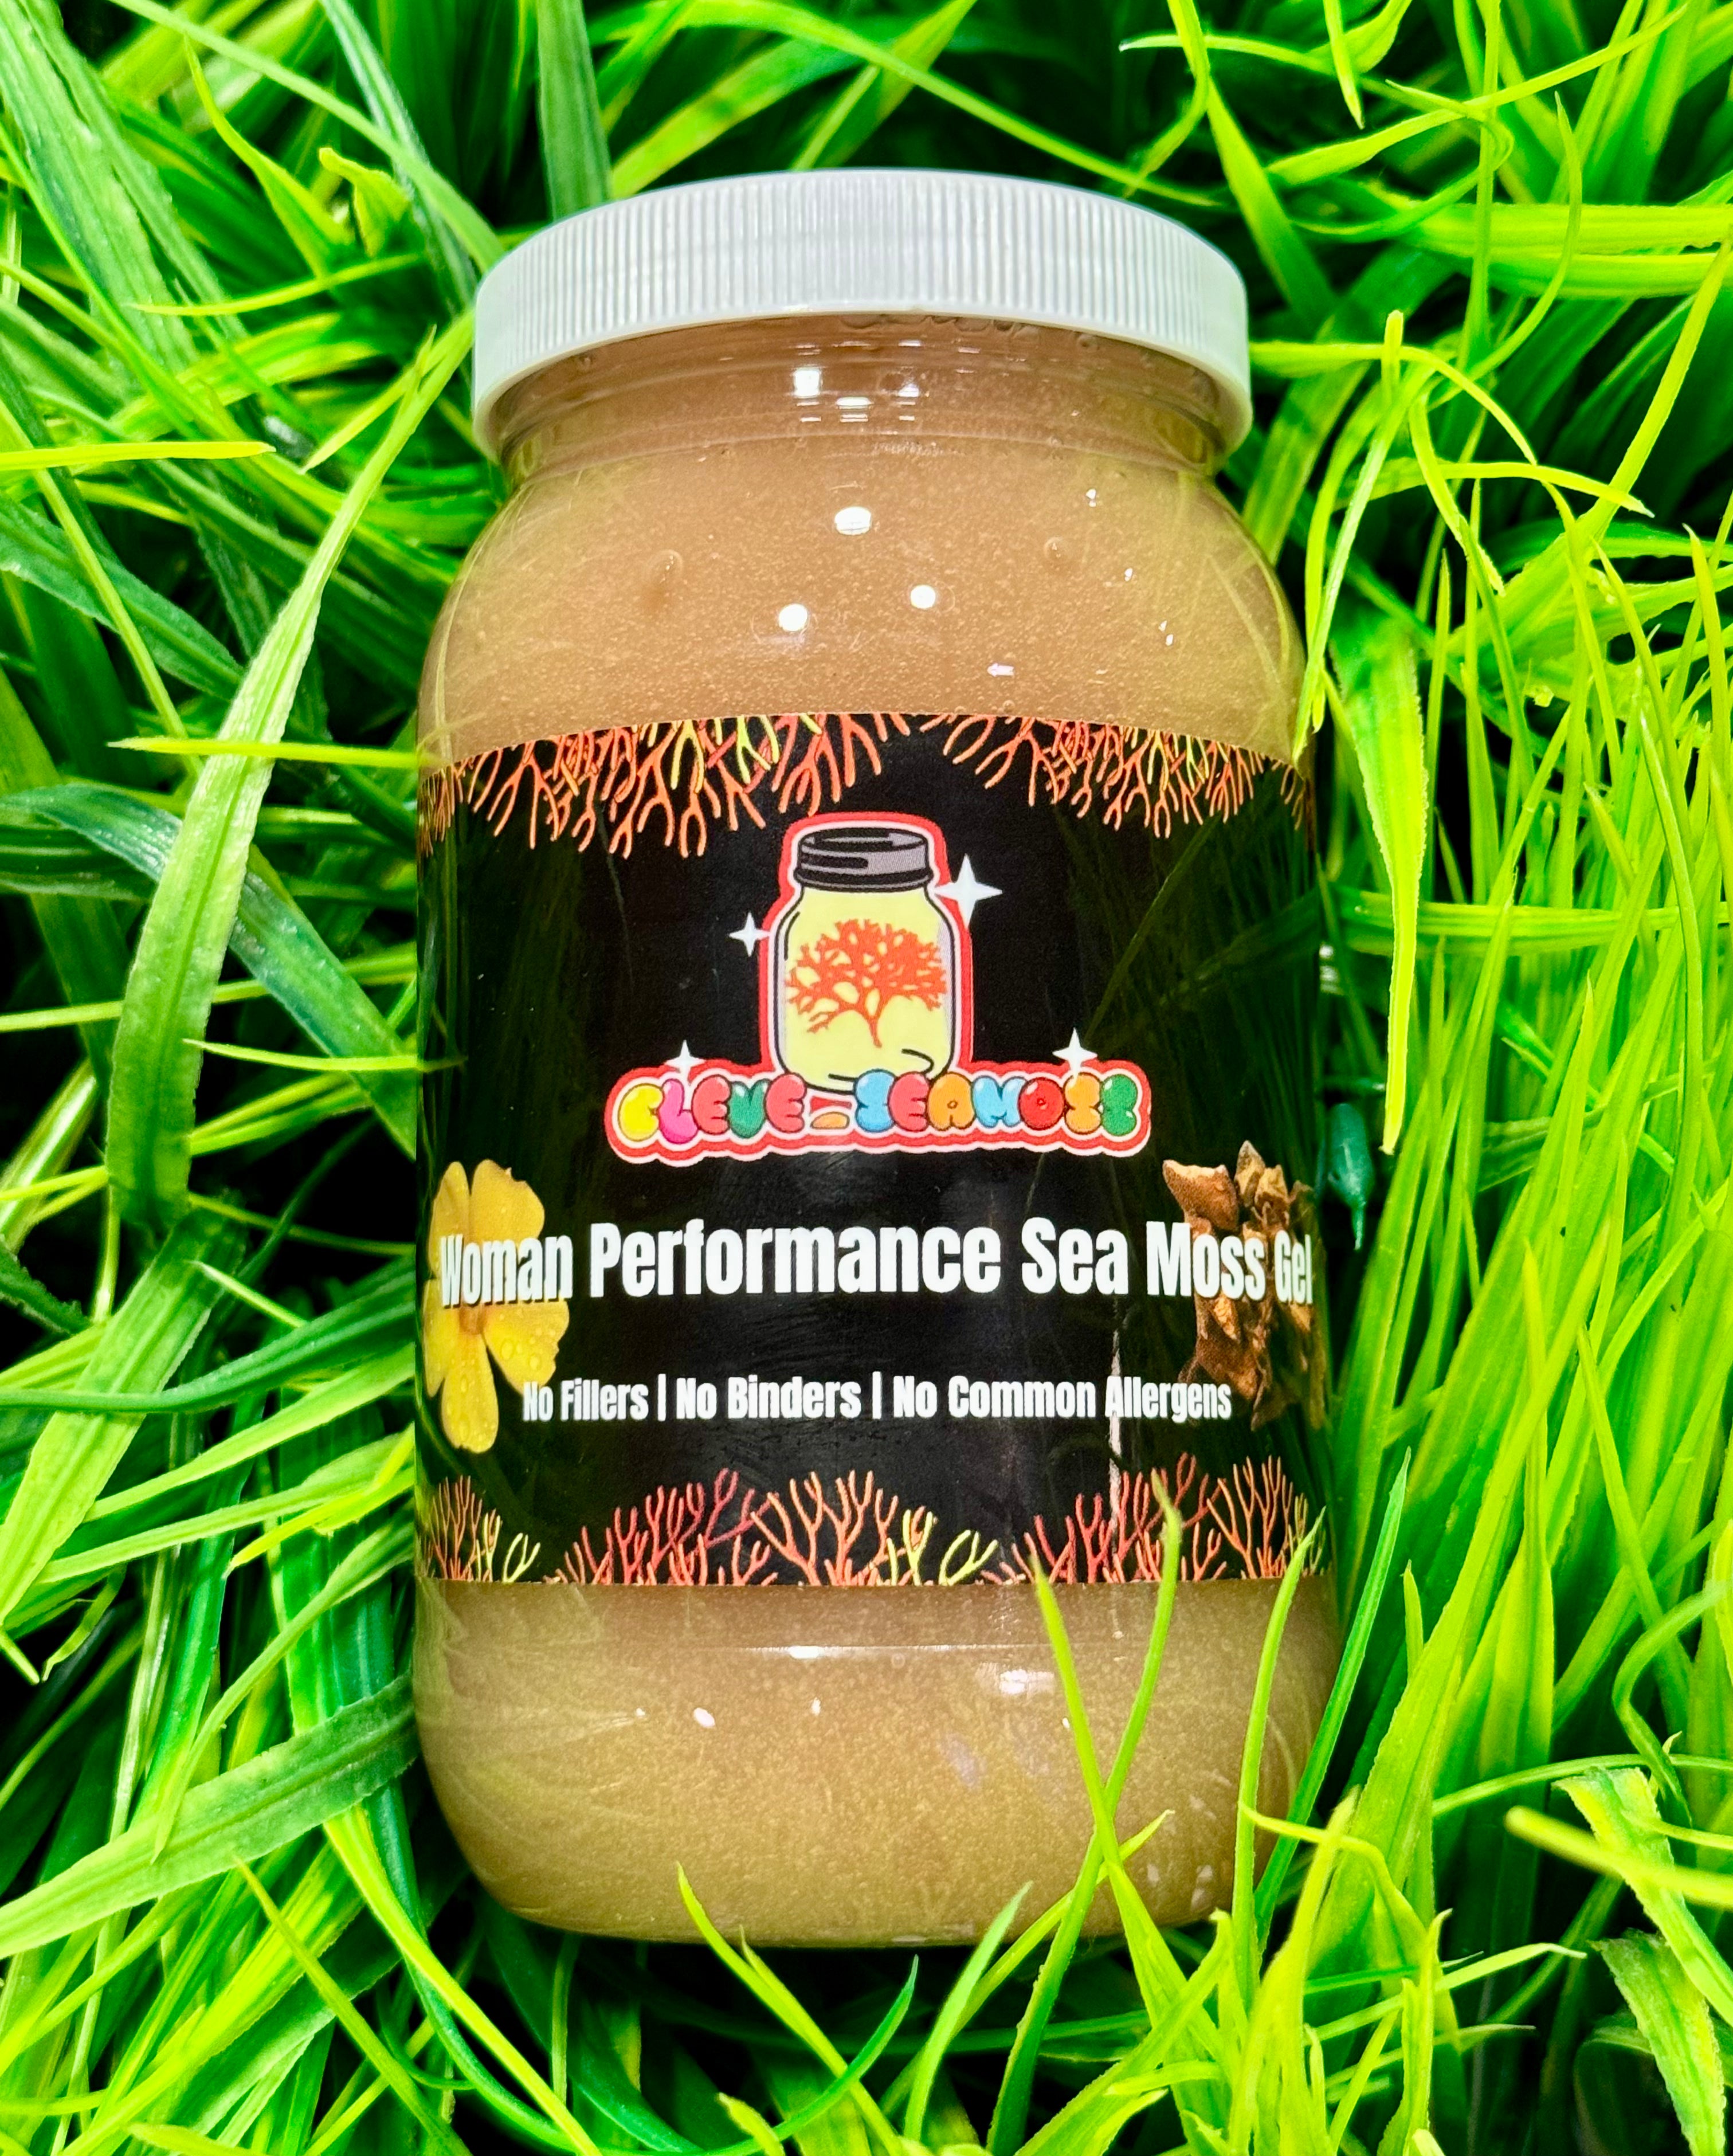 Woman Performance Sea Moss